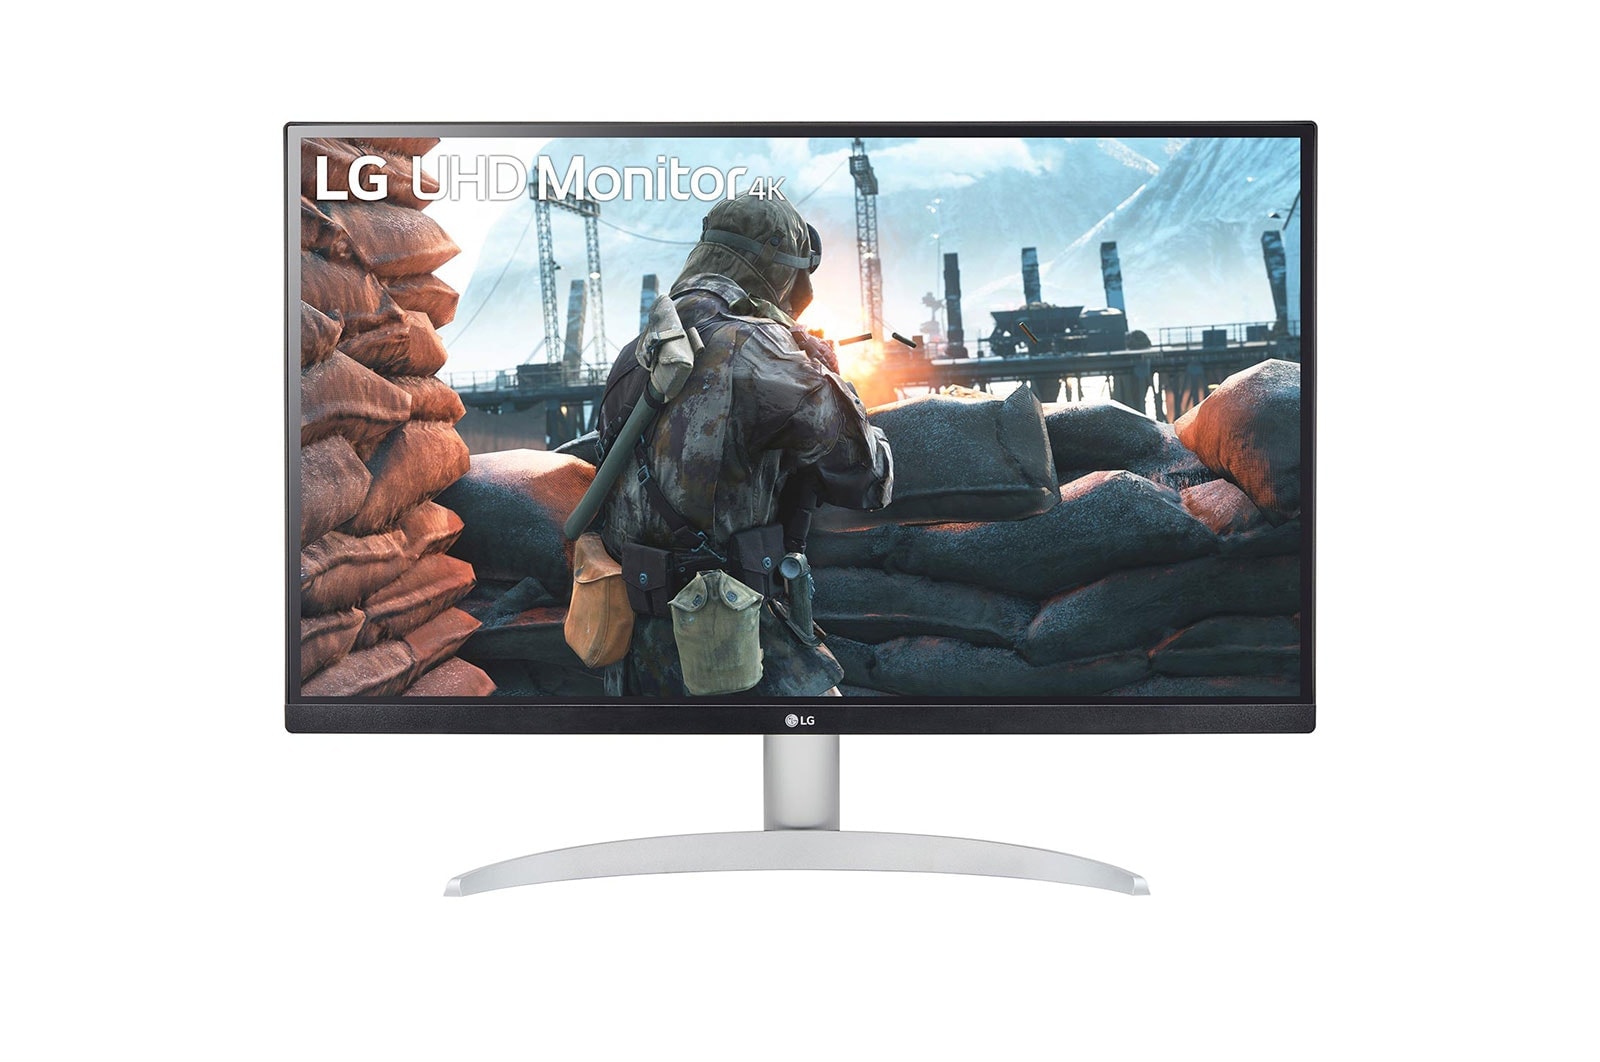 LG 27UP600-W - Monitor para creadores LG 4K UHD (Panel IPS: 3840x2160, 400nit, 1200:1, HDR10, DCI-P3 >95%); diag. 68,4cm; entradas: HDMI x2, DP x1., 27UP600-W